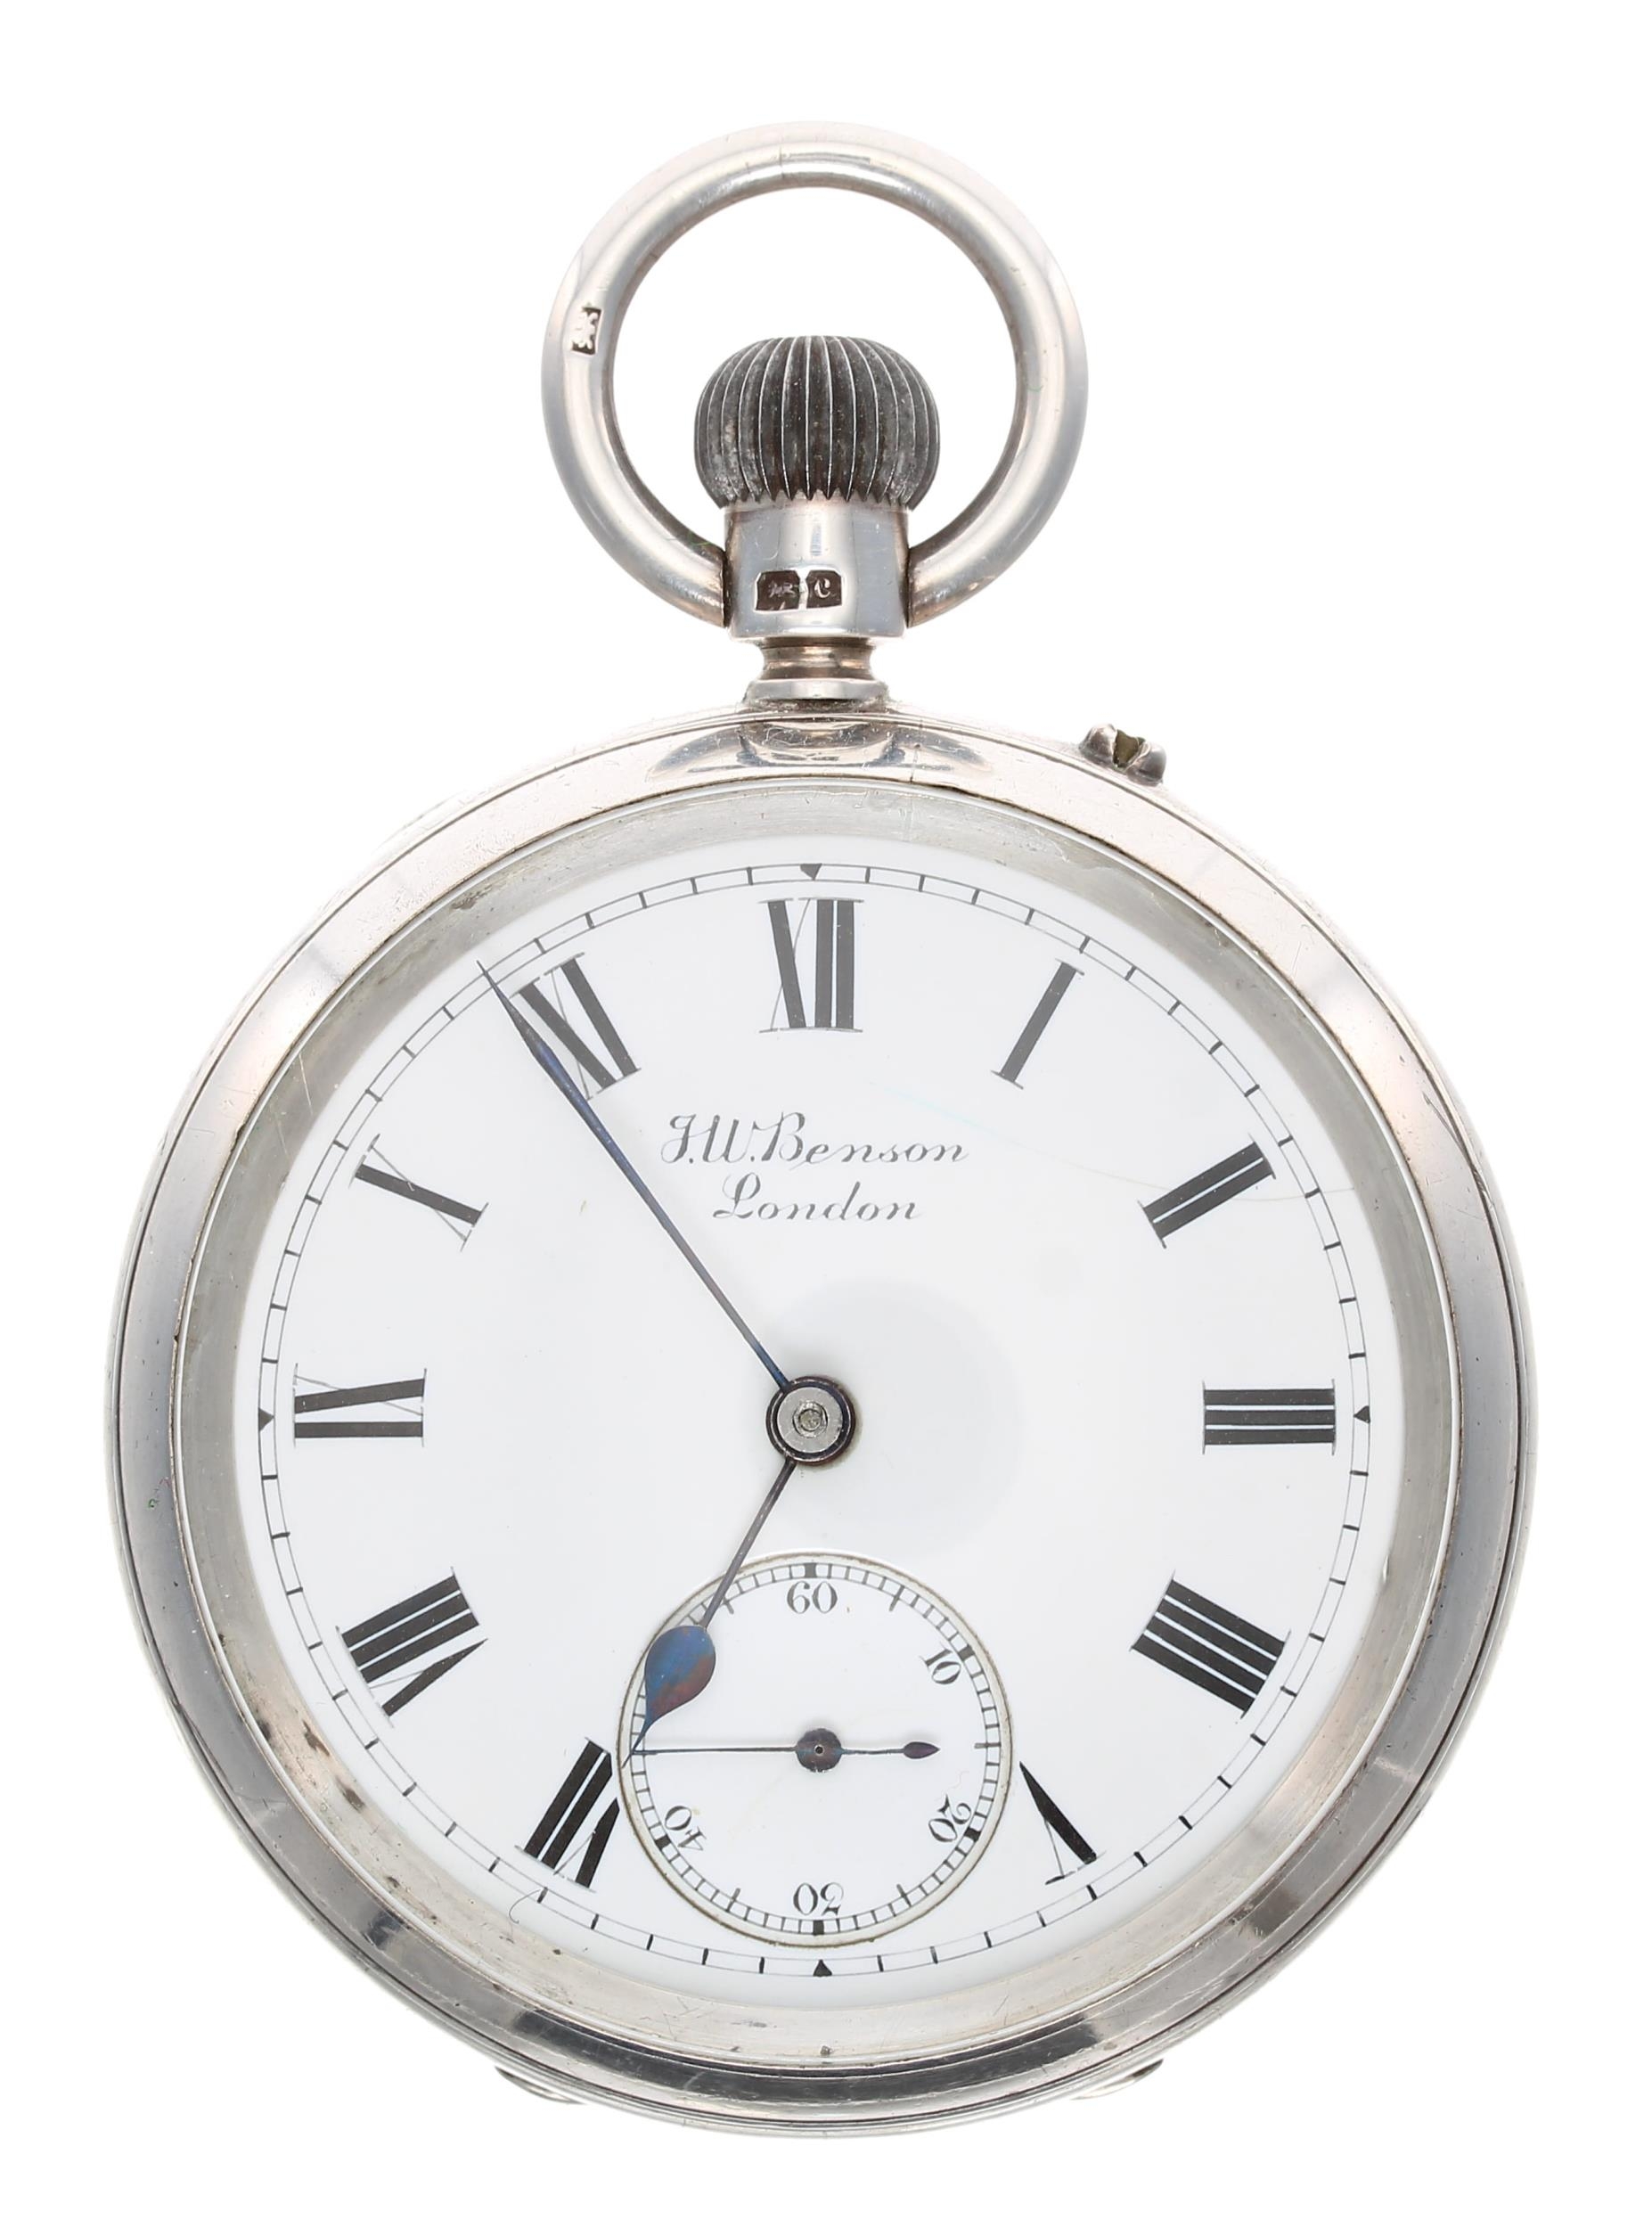 J.W. Benson 'The Bank Watch' - Edwardian silver lever pocket watch, London 1903, three quarter plate - Image 2 of 4